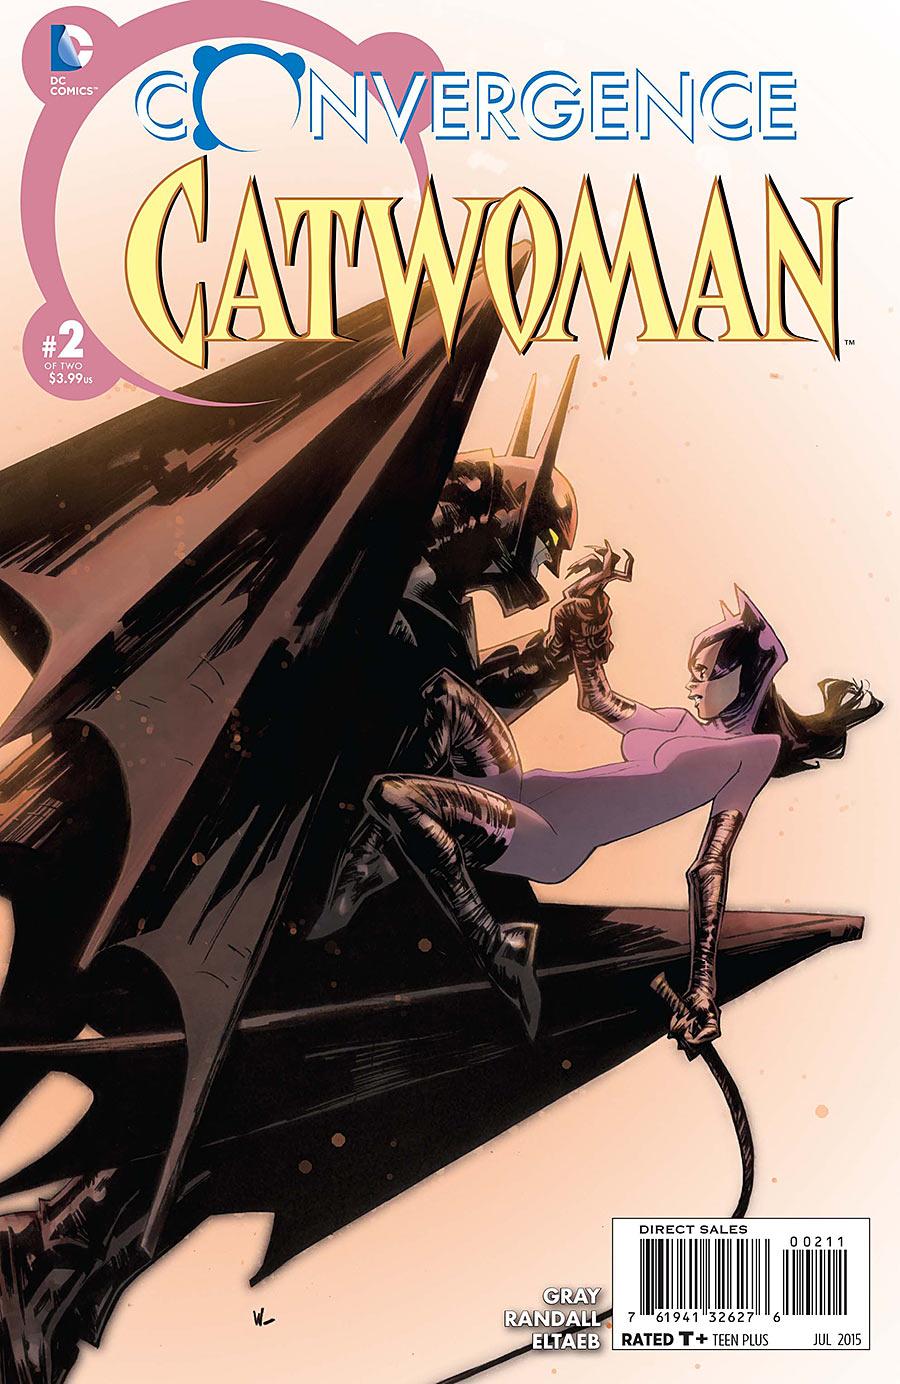 Convergence: Catwoman Vol. 1 #2